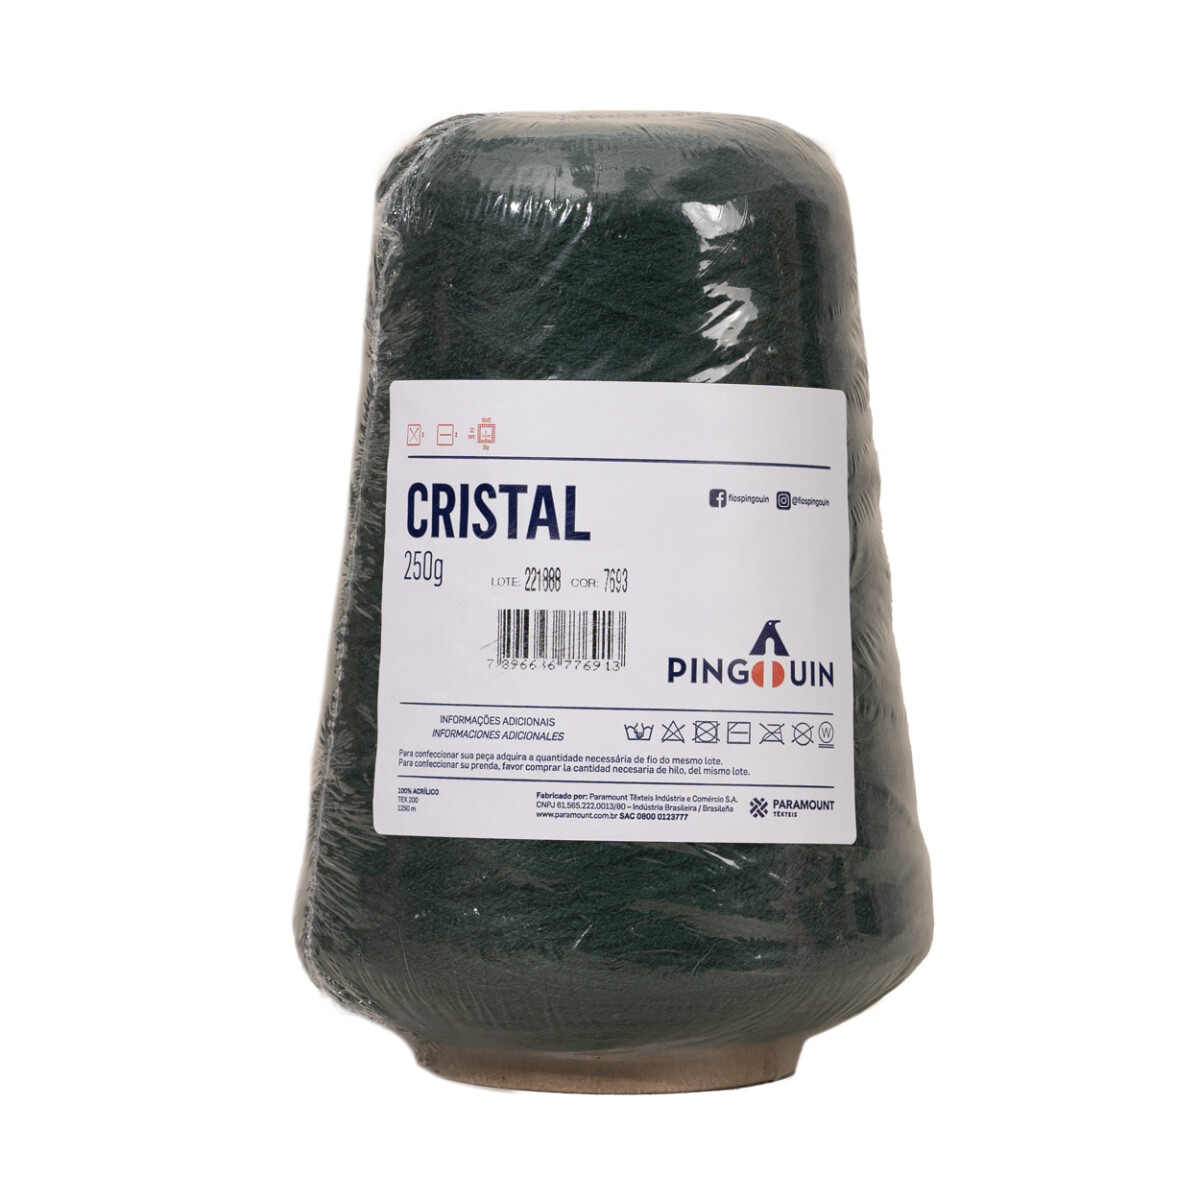 Cono Pingouin Cristal - bottle 